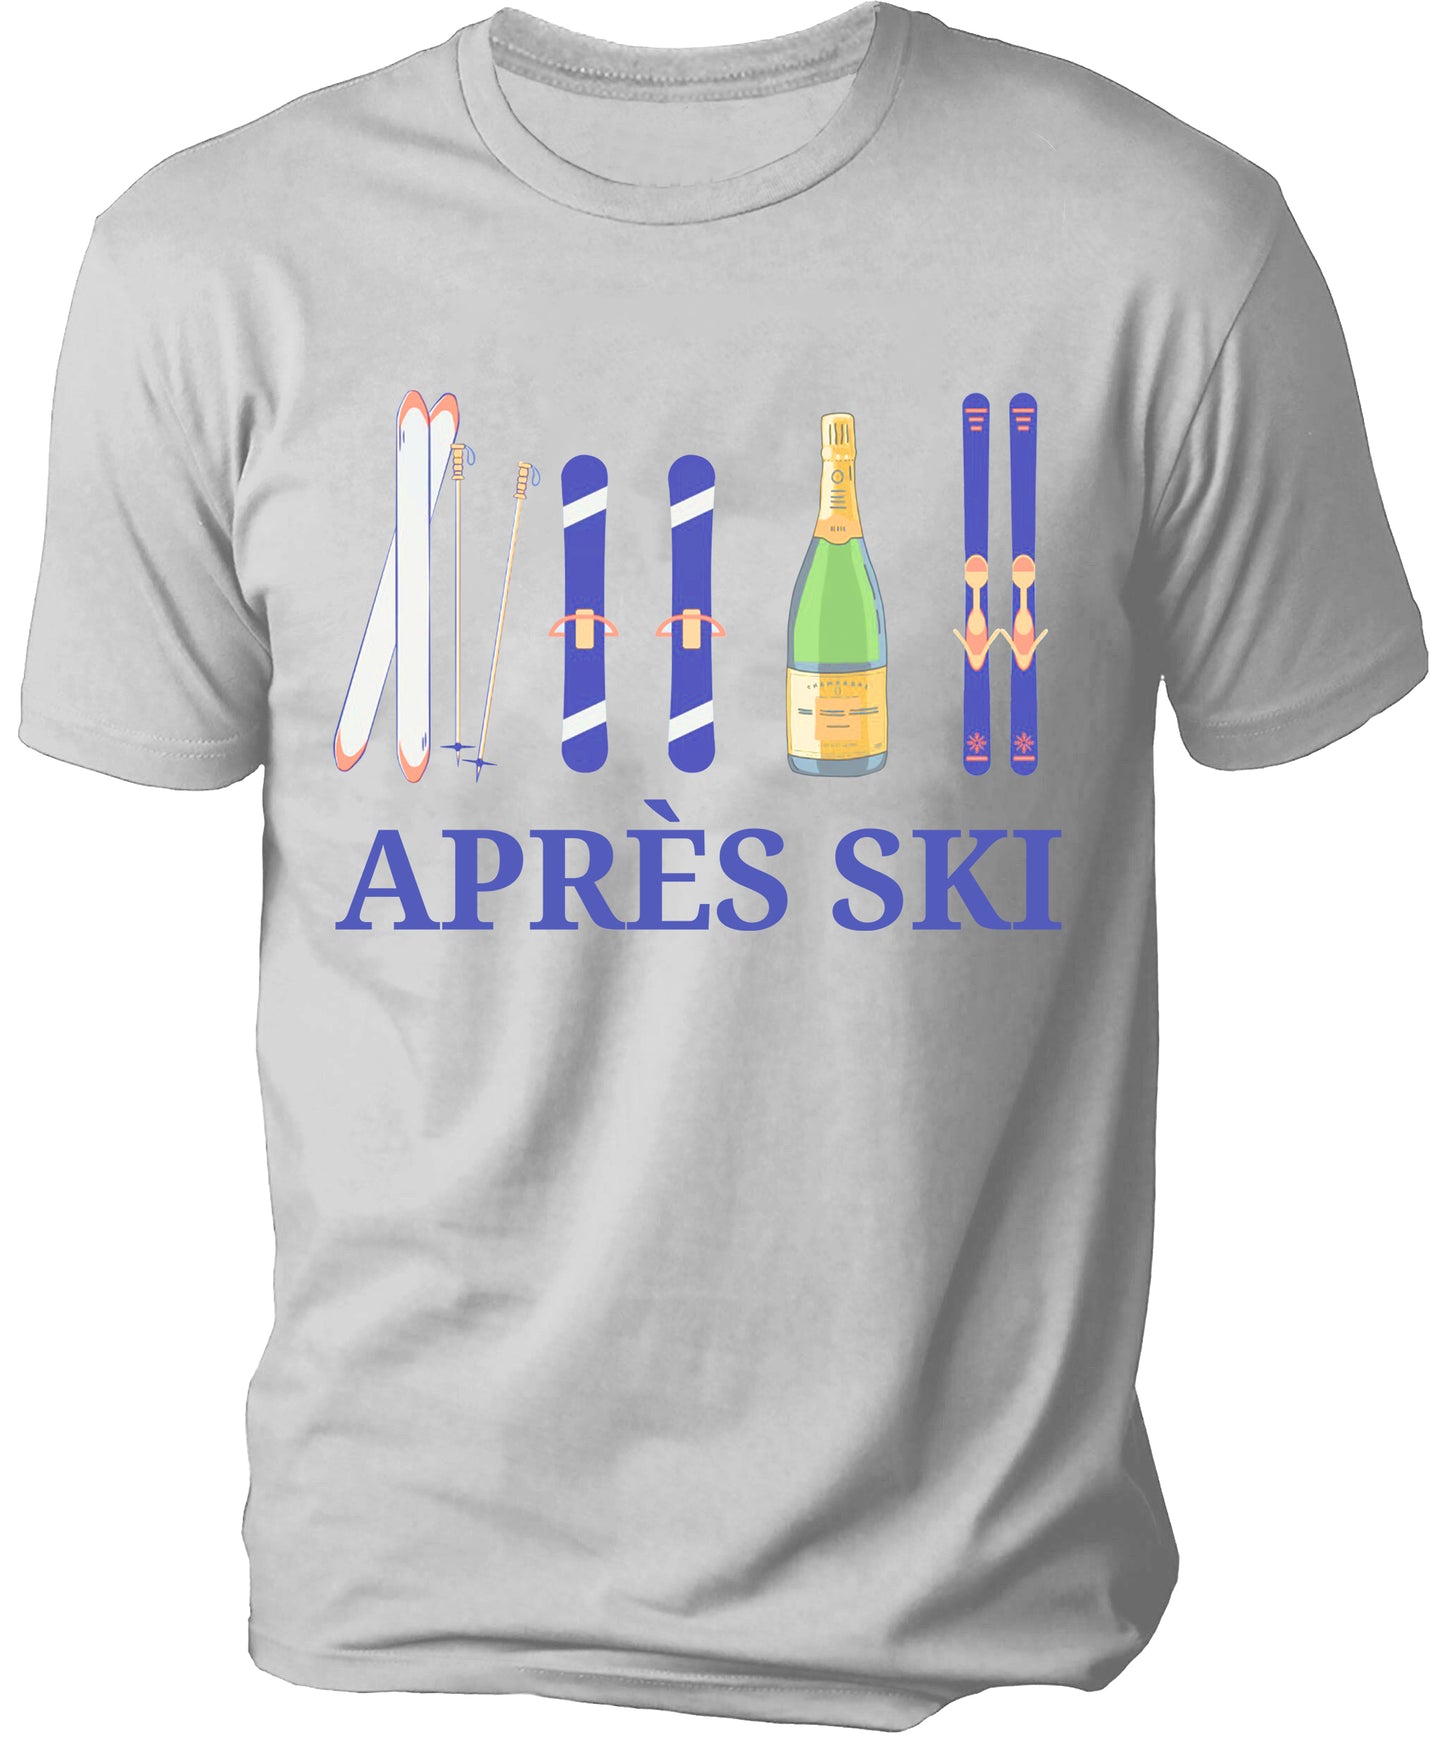 Unisex Casual T-Shirt Après Ski